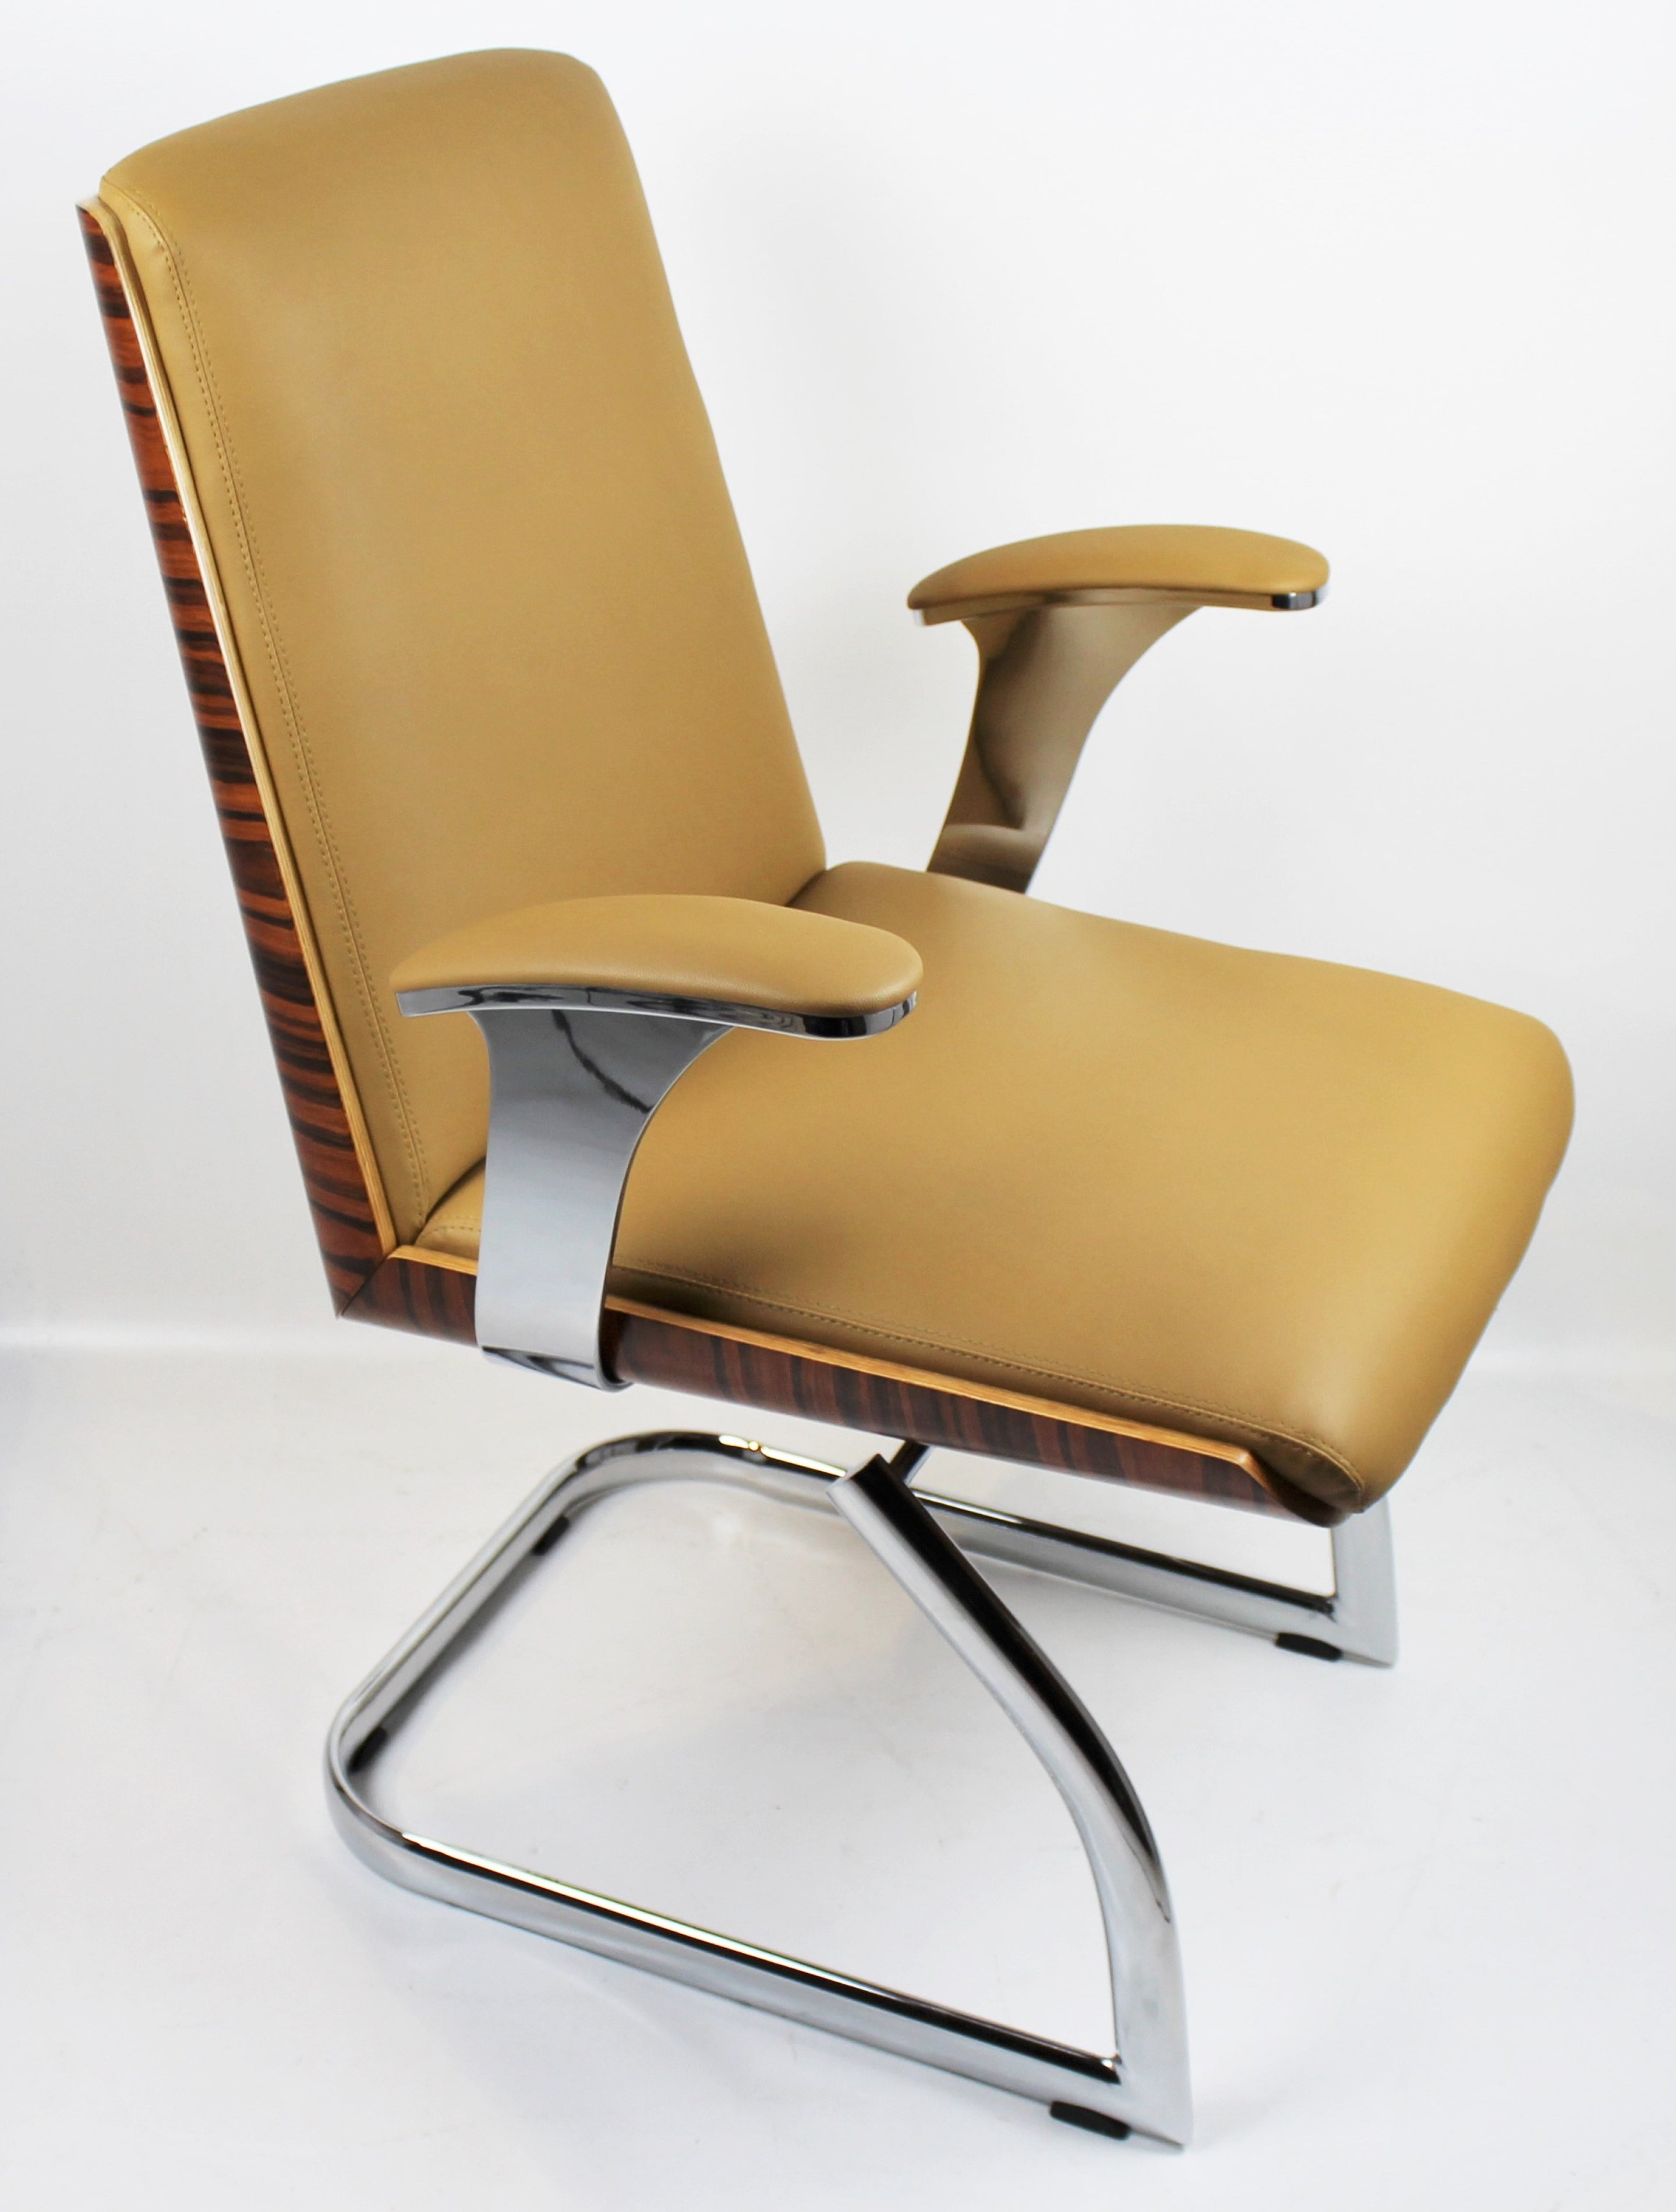 Beige Leather Chair with Walnut Veneer Shell - CHA-1205C UK